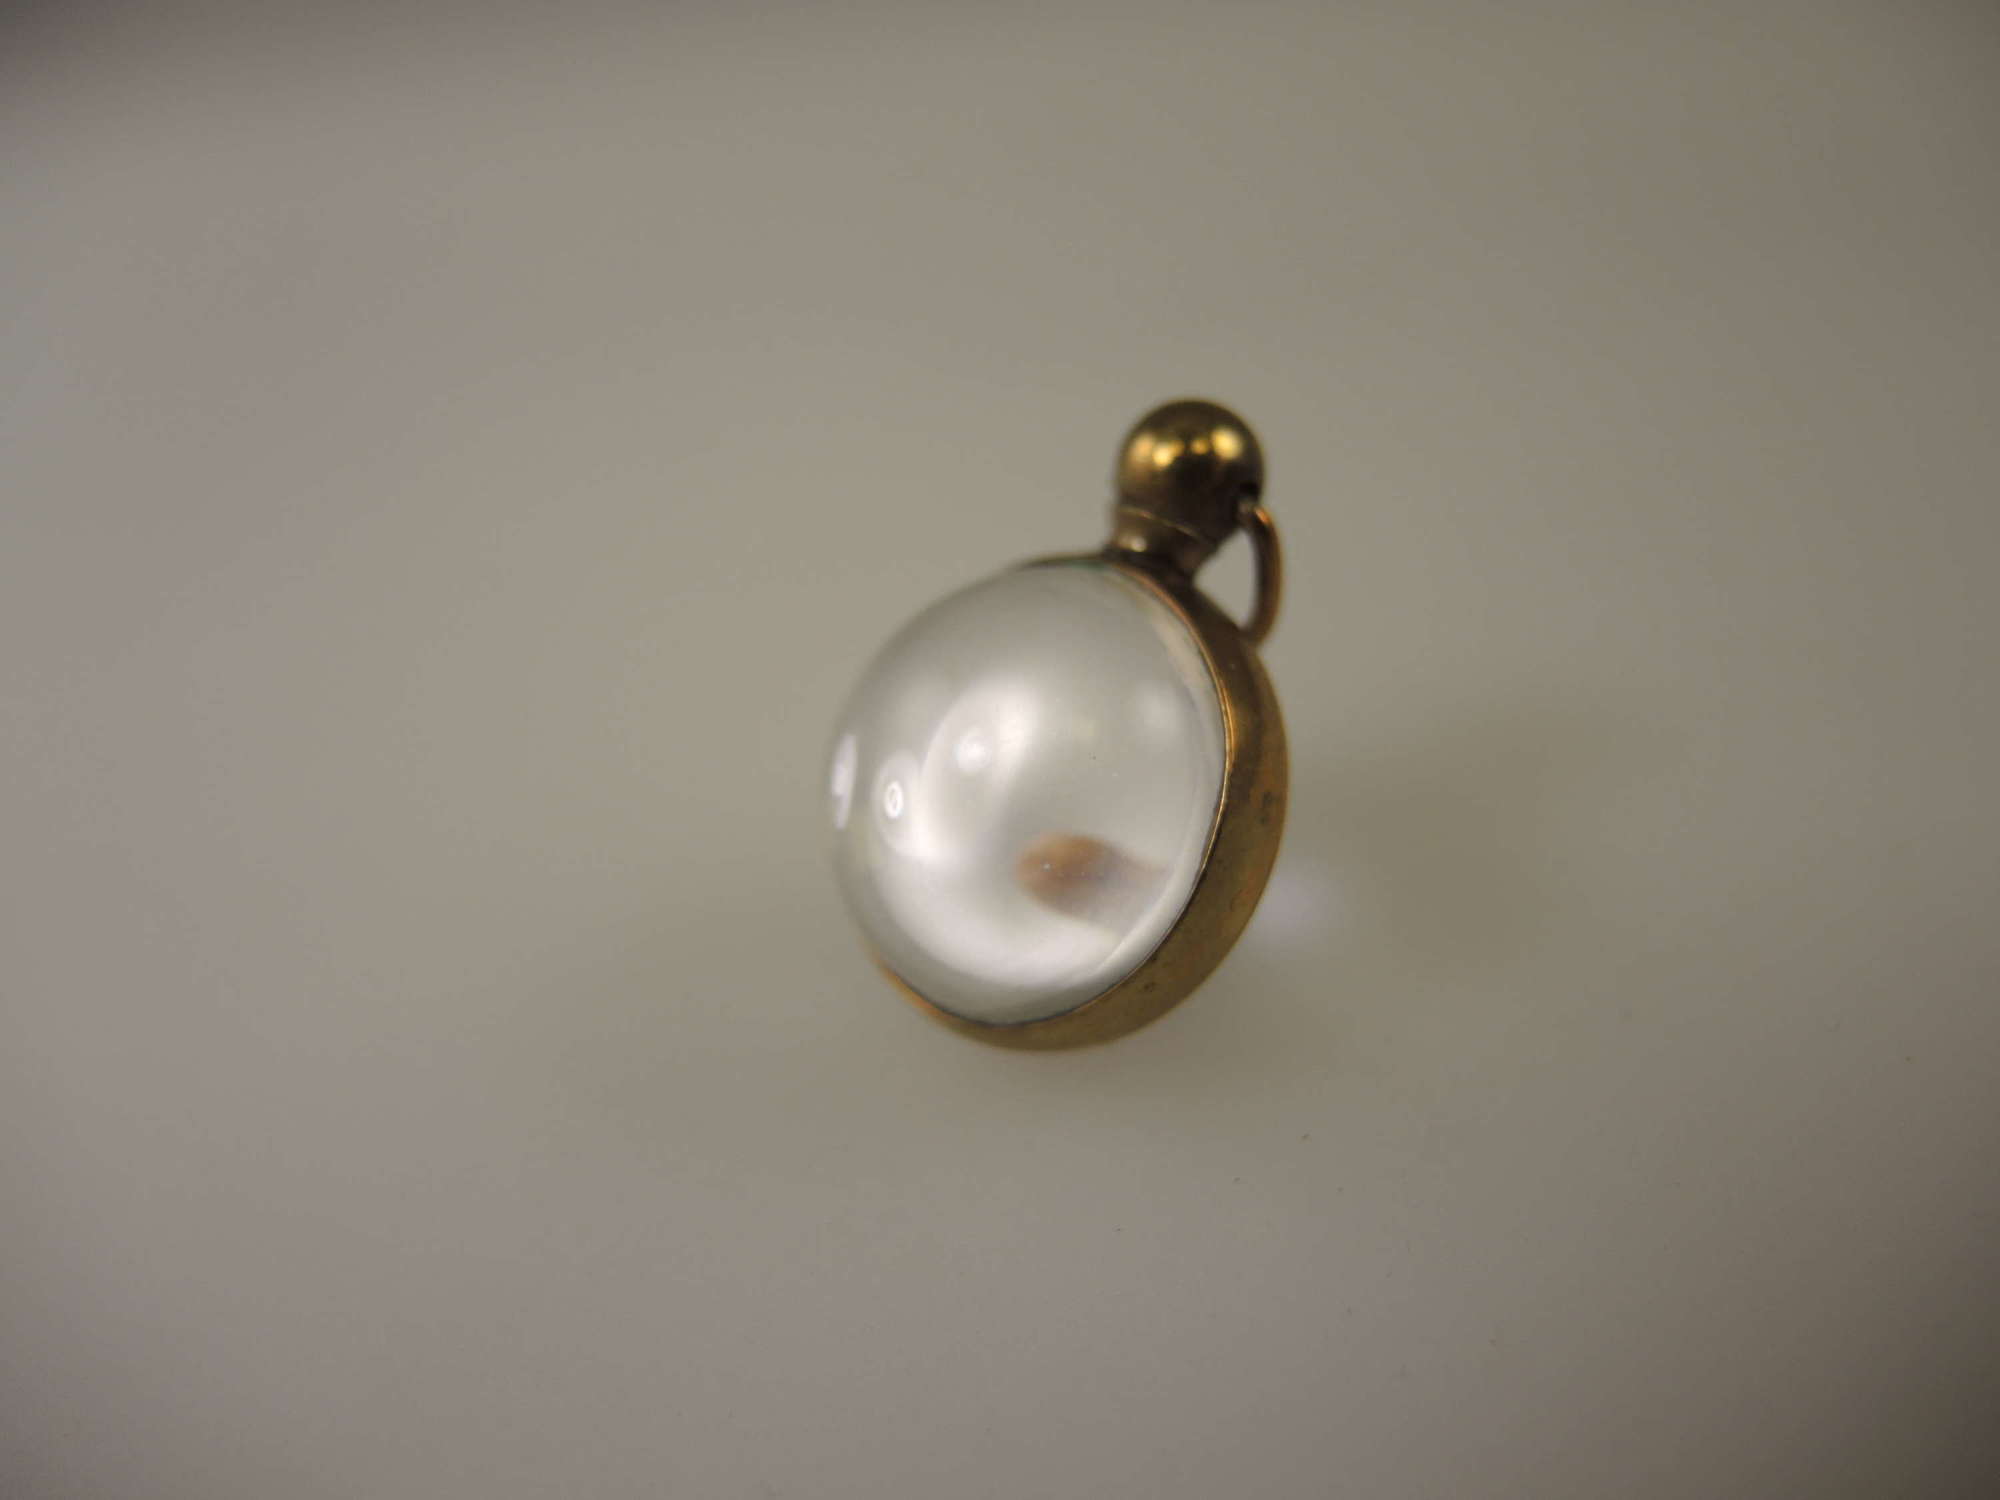 Gilt and glass ball locket c1890